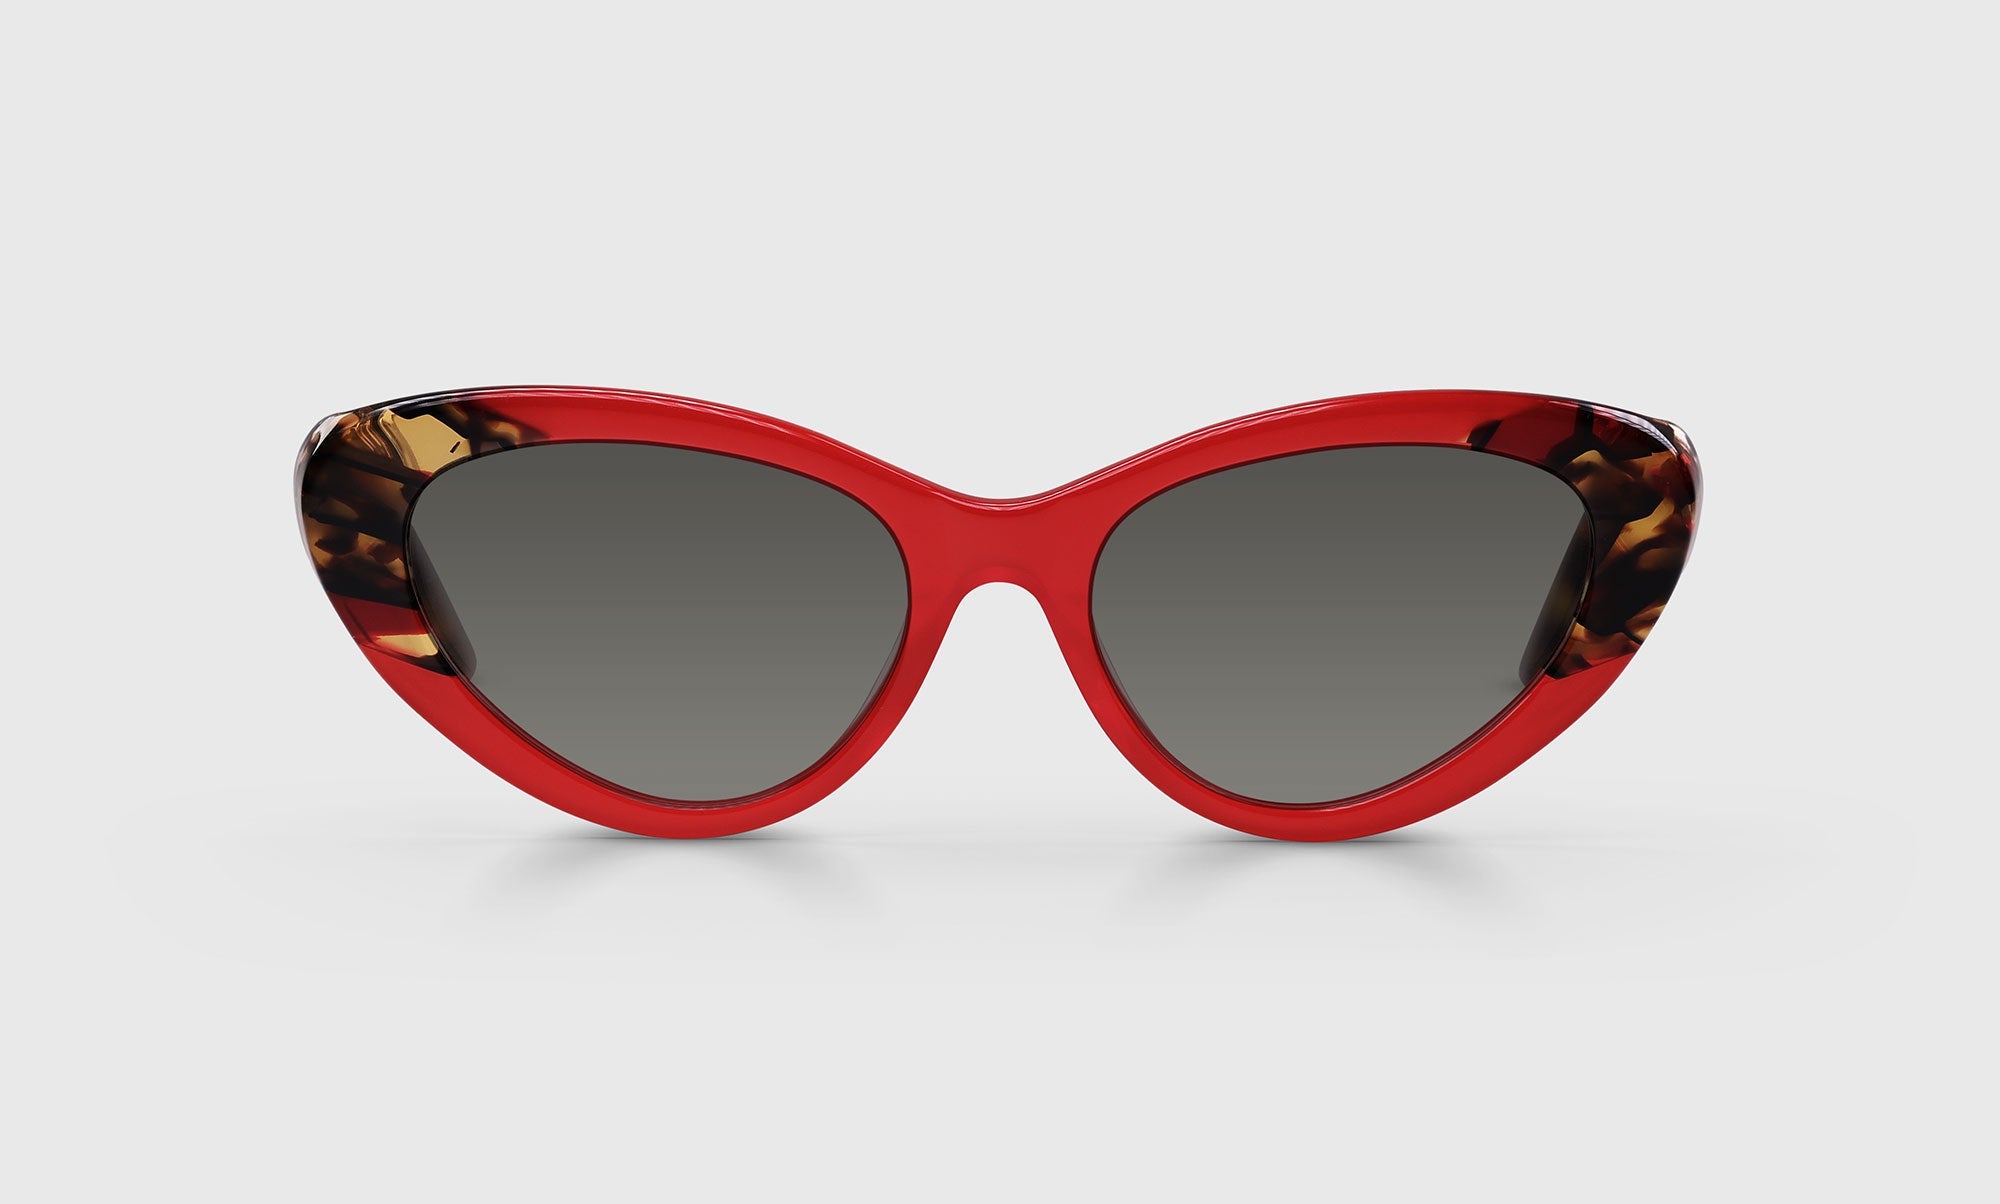 01-pg | eyebobs Clawstruck, Cat Eye, Average, Bifocal Reader Sunglasses, Polarized Grey Sunglasses